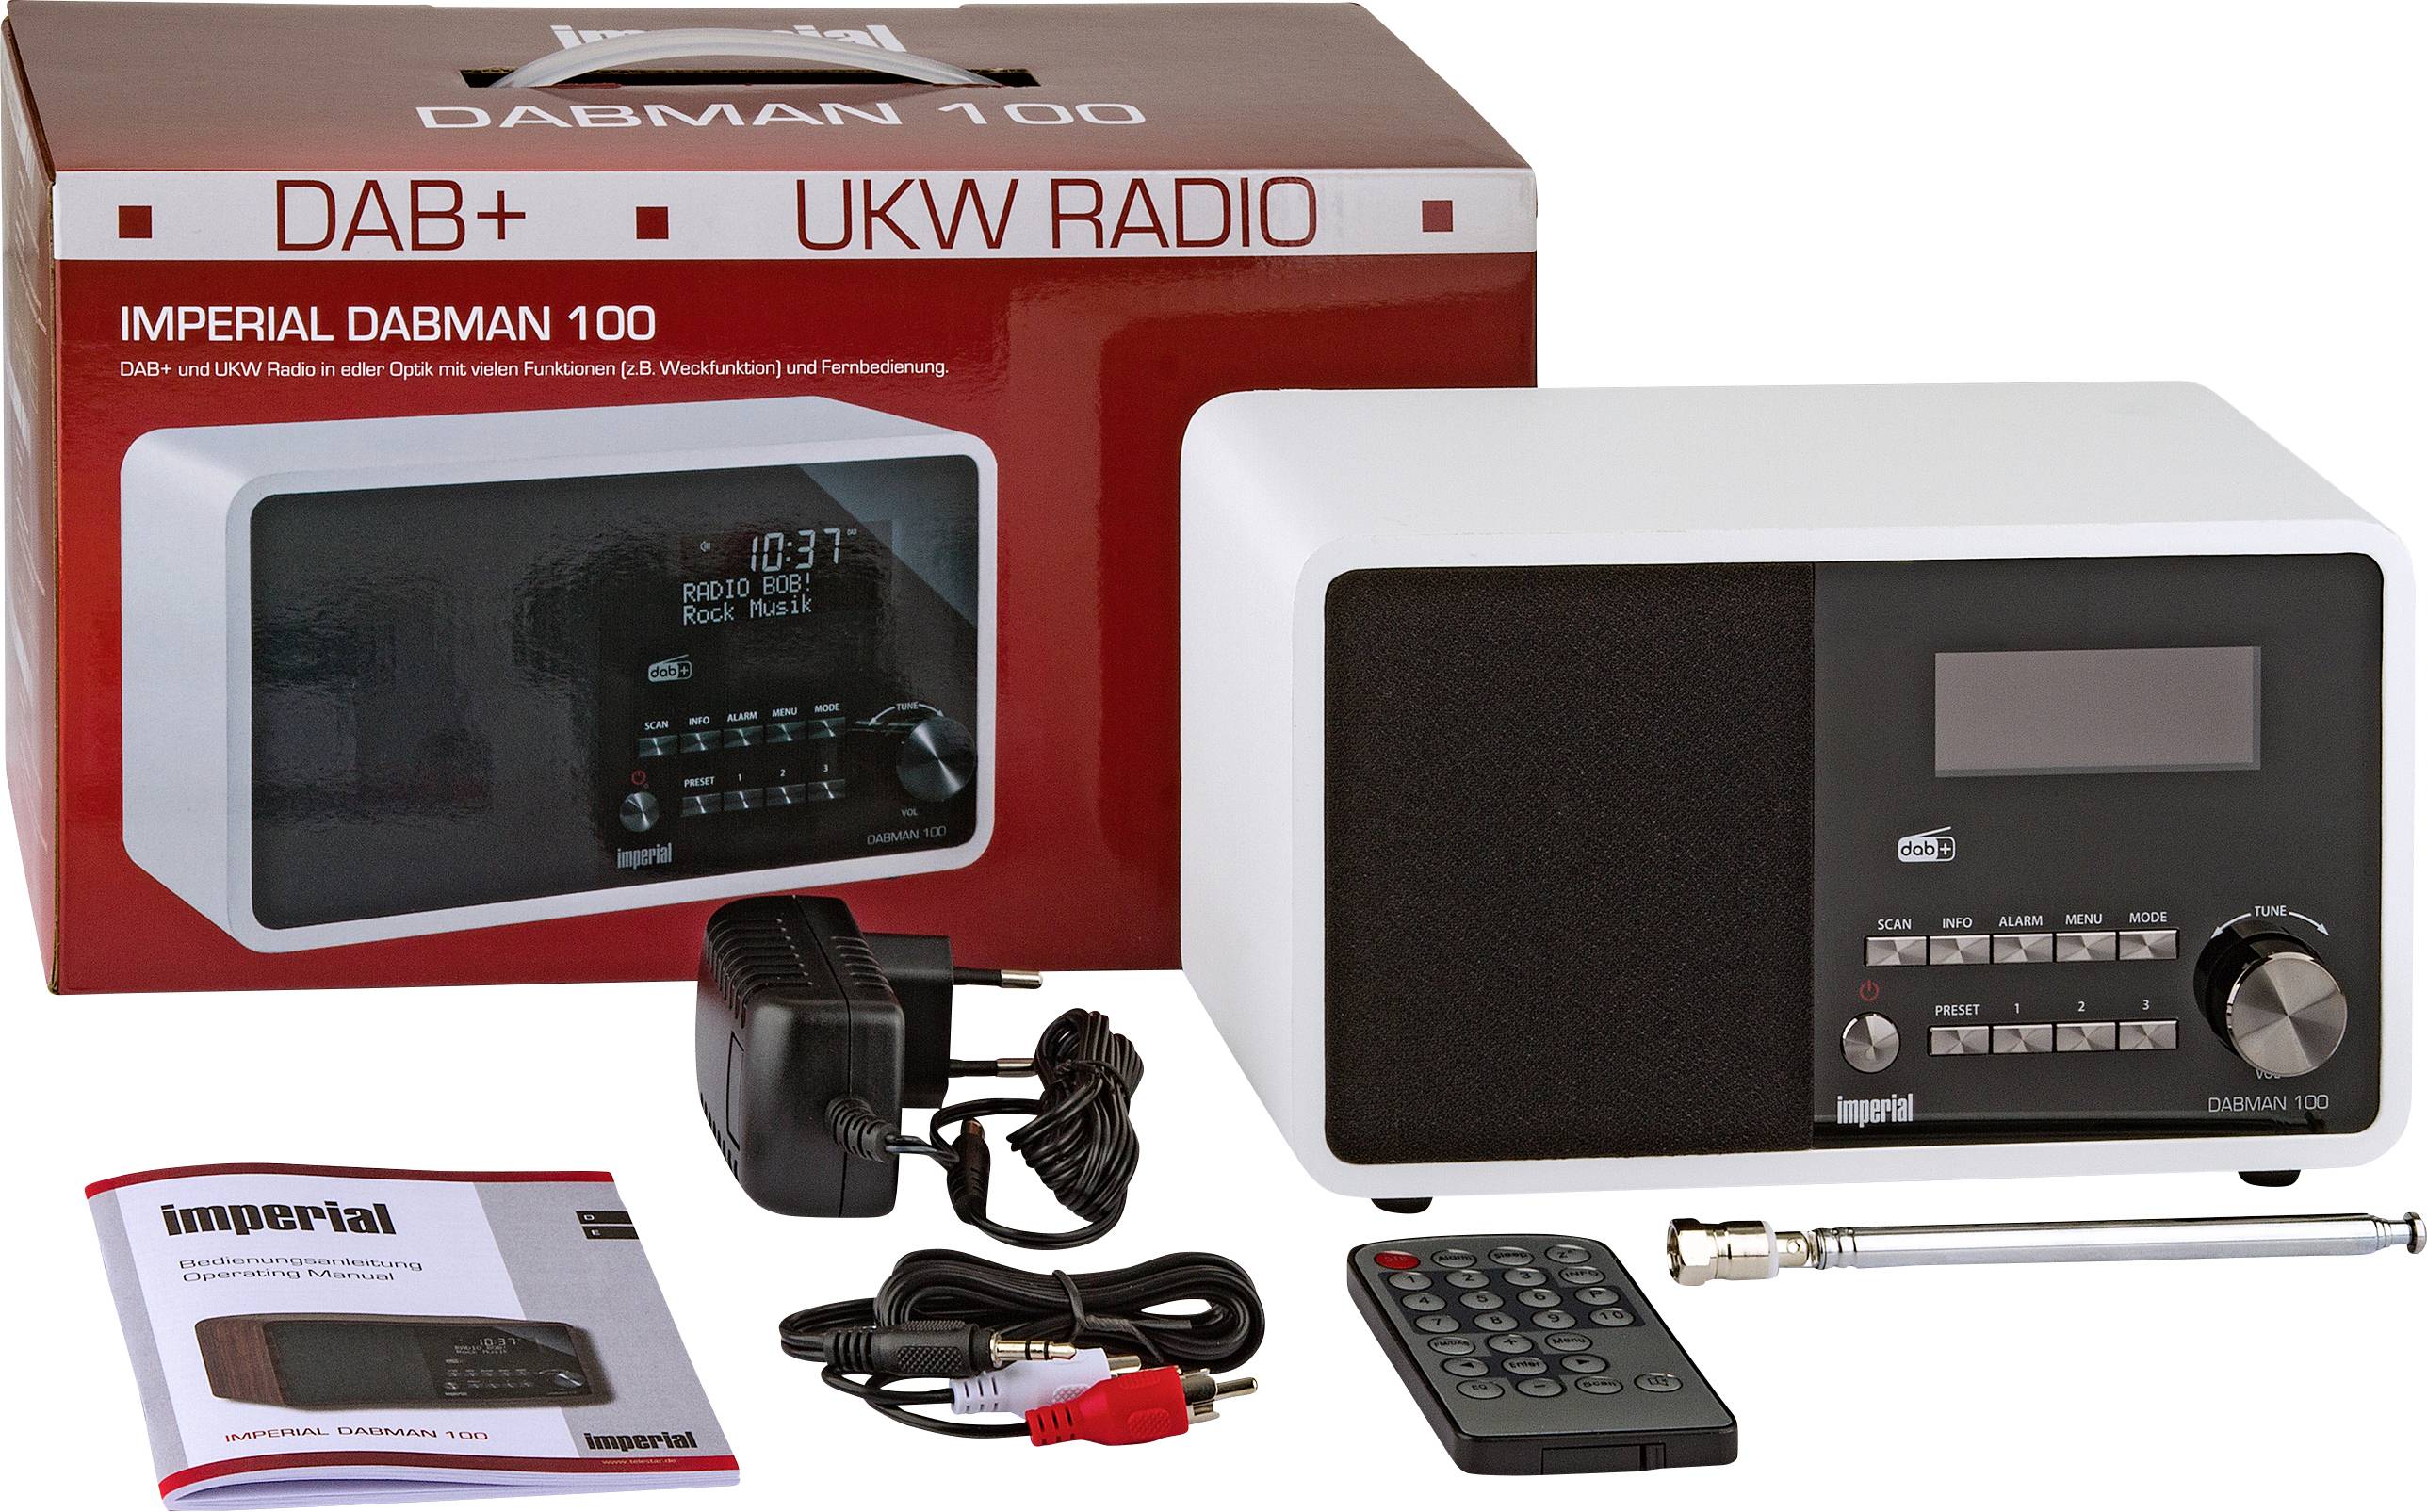 VHF DAB radio Imperial dabman 100 blanco radio digital DAB + Aux-in pantalla lcd 